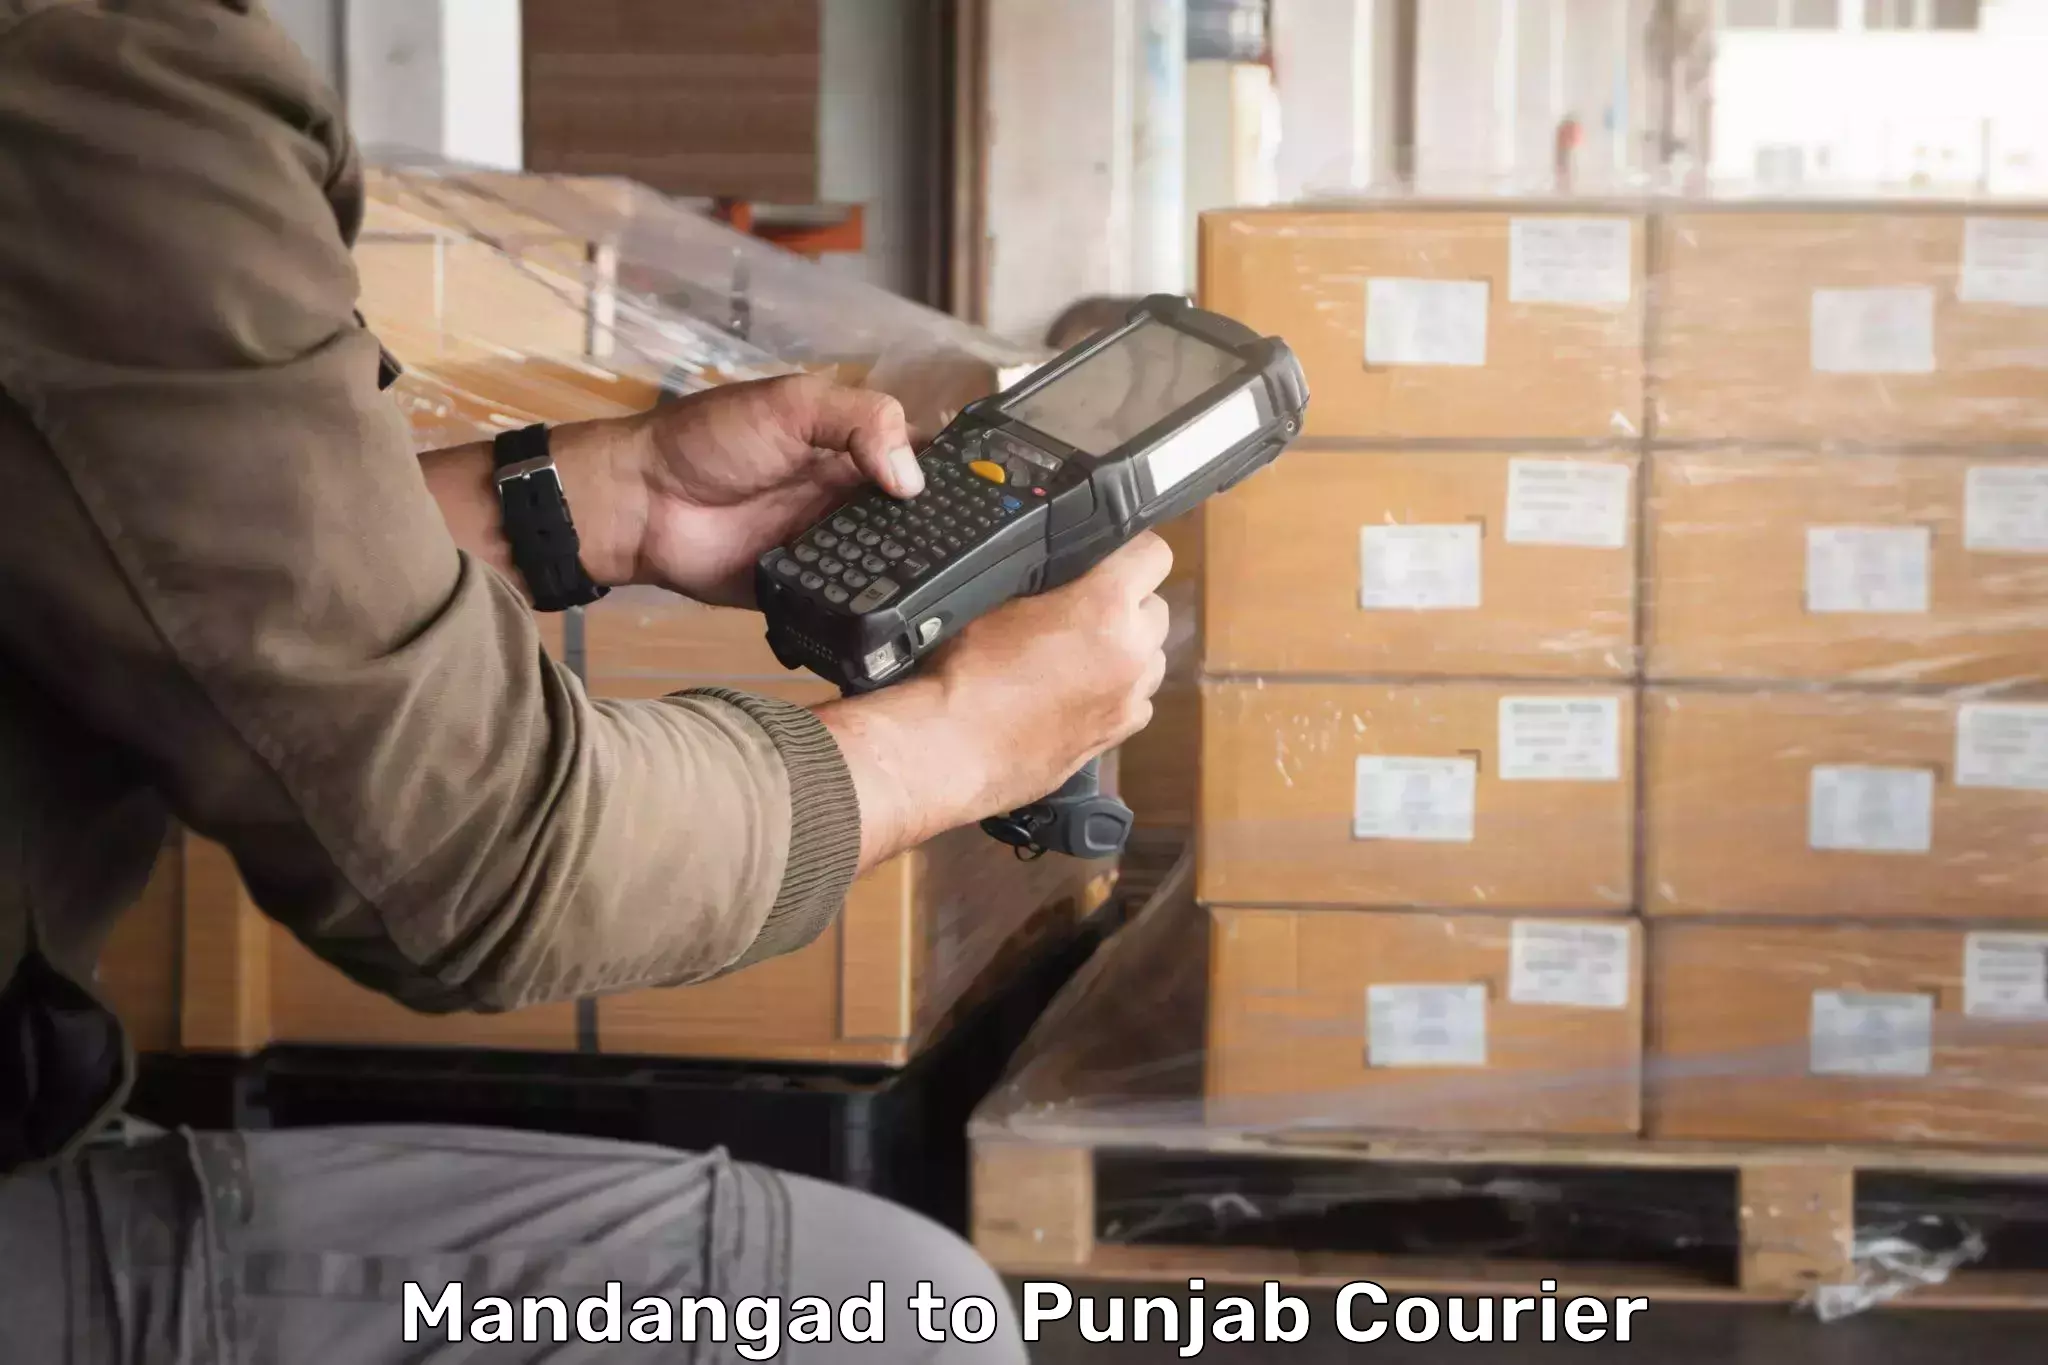 Cash on delivery service Mandangad to Ajnala